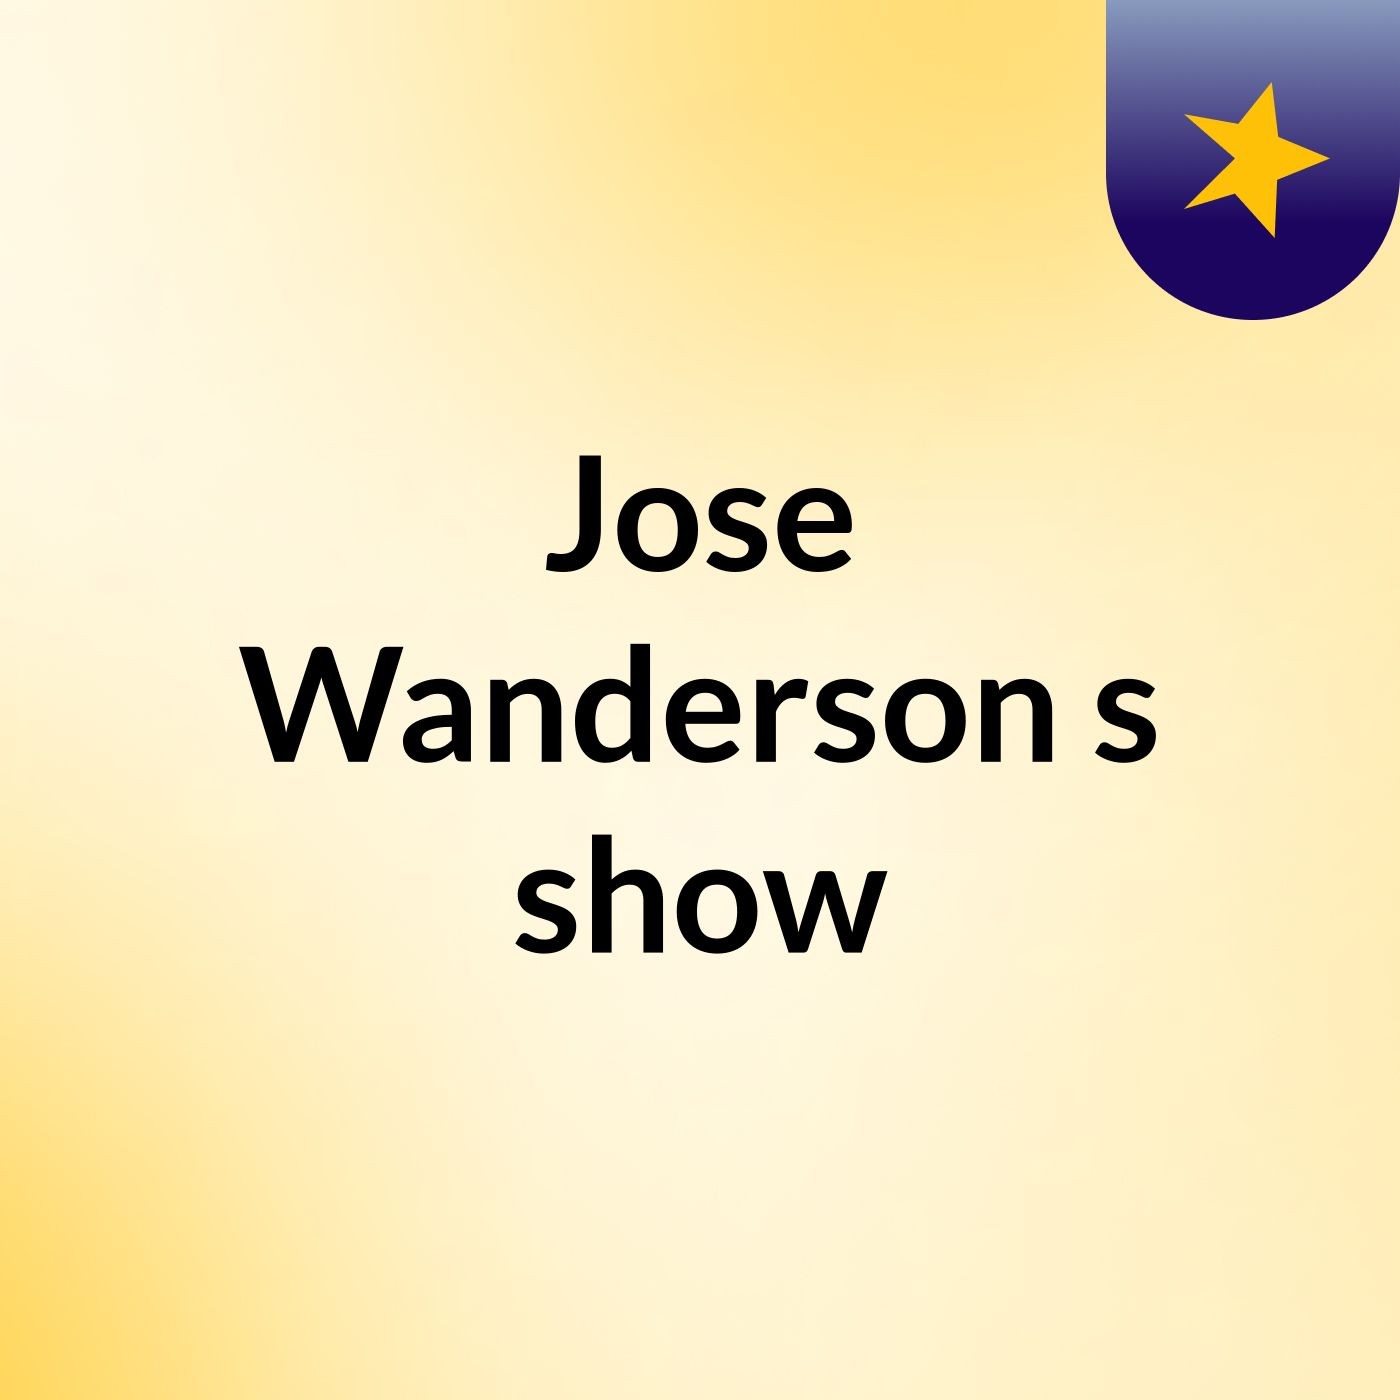 Jose Wanderson's show